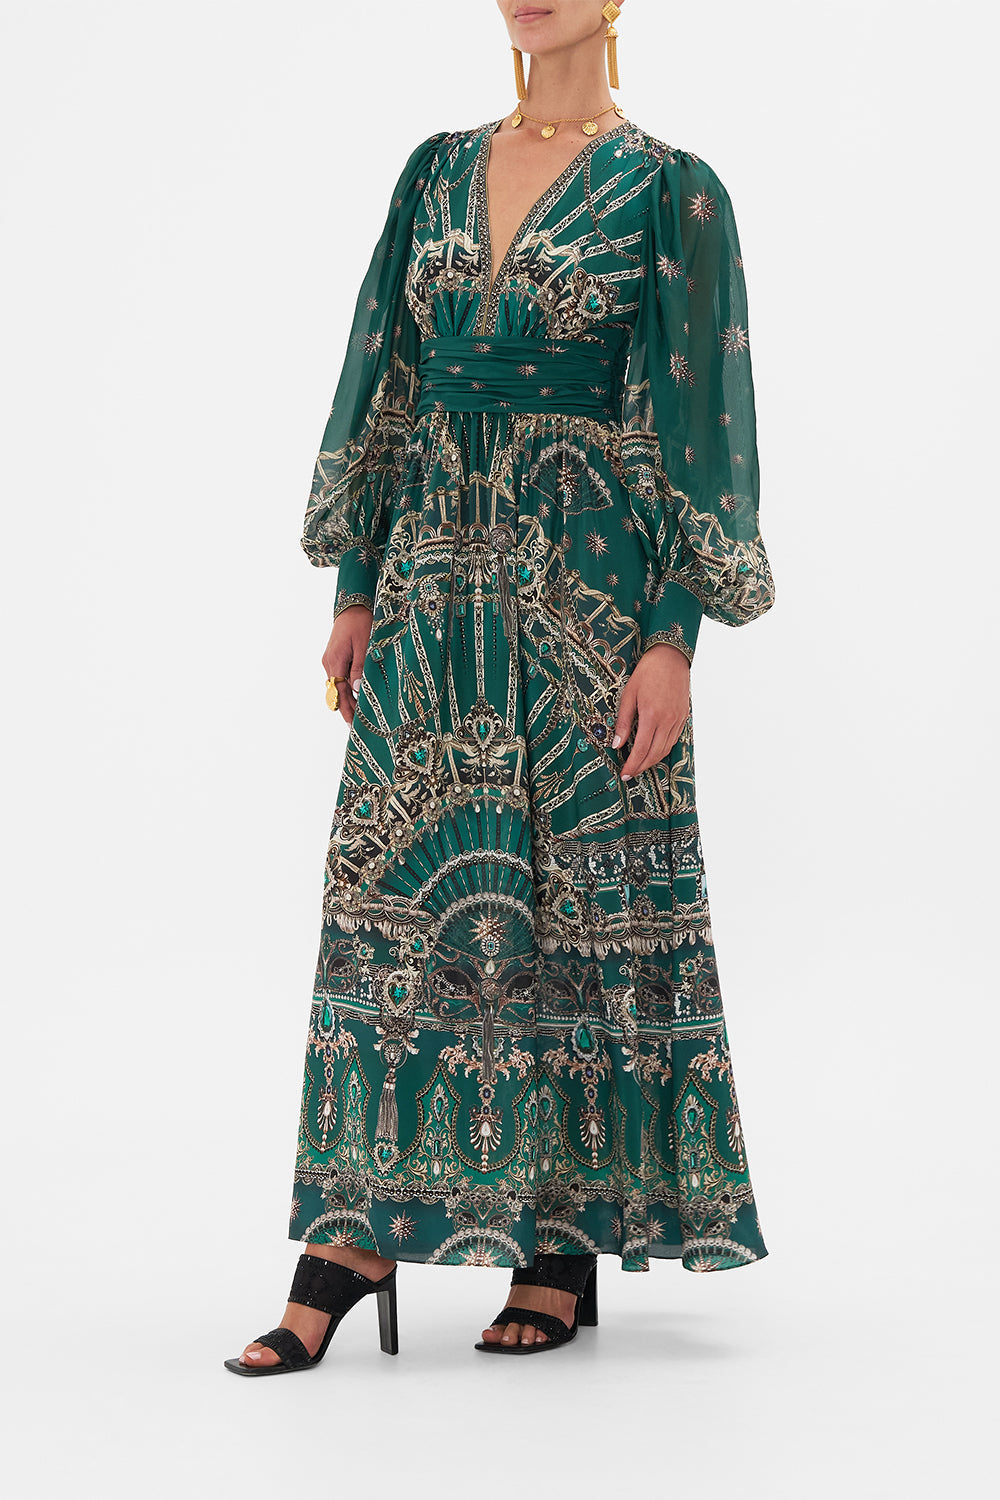 Side view of model wearing CAMILLA Long Silk Dress in A Venice Veil print